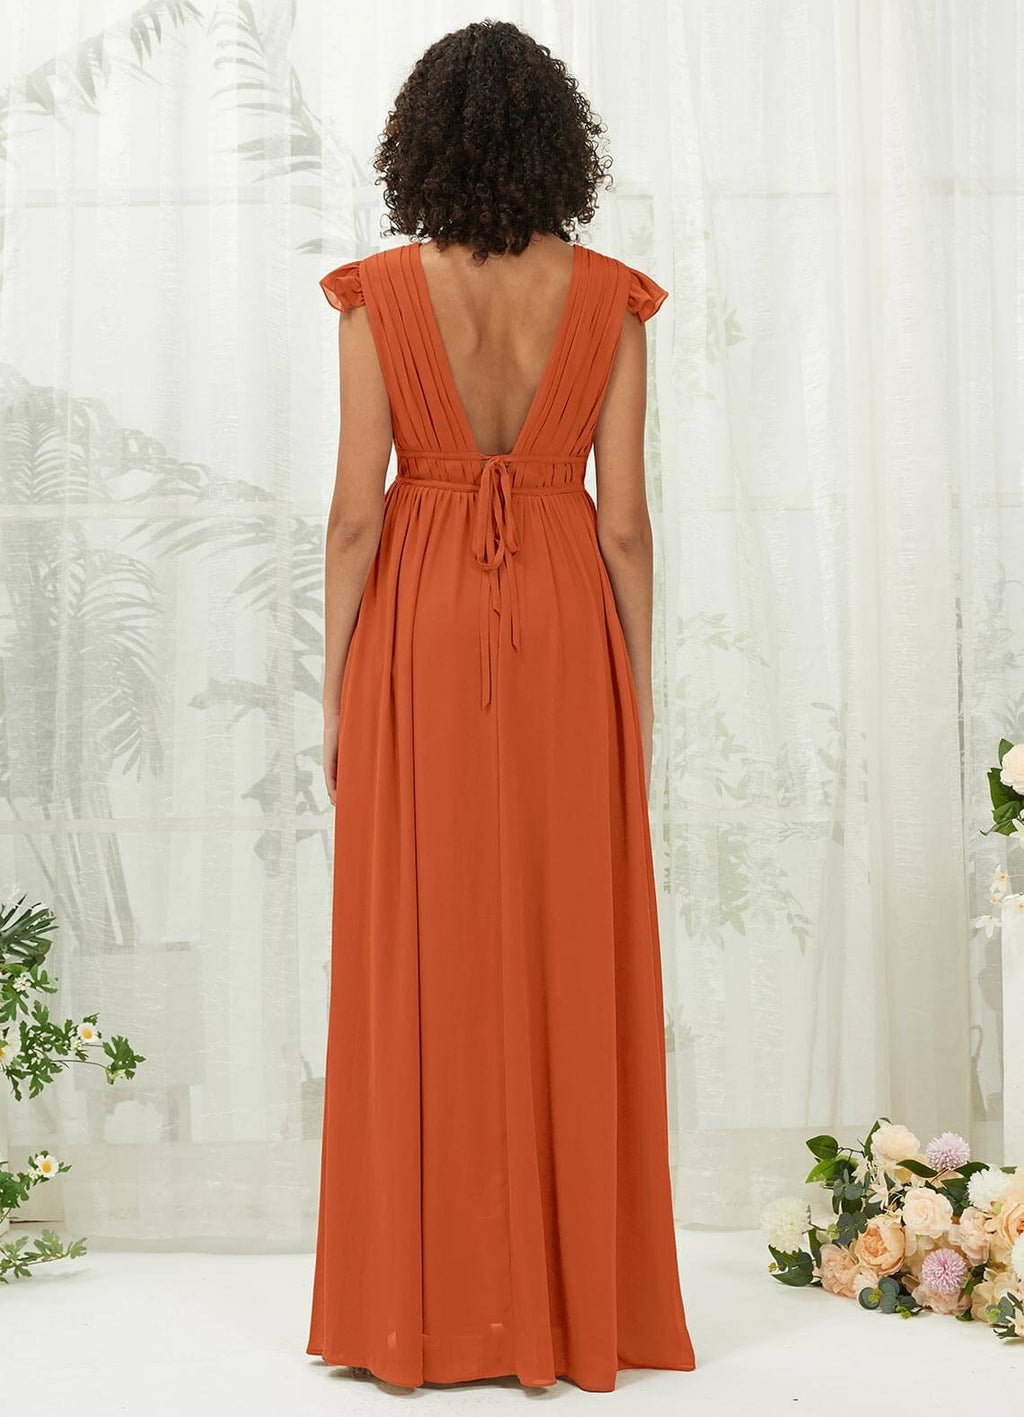 NZ Bridal Burnt Orange Cap Sleeves Chiffon bridesmaid dresses R0410 Collins a